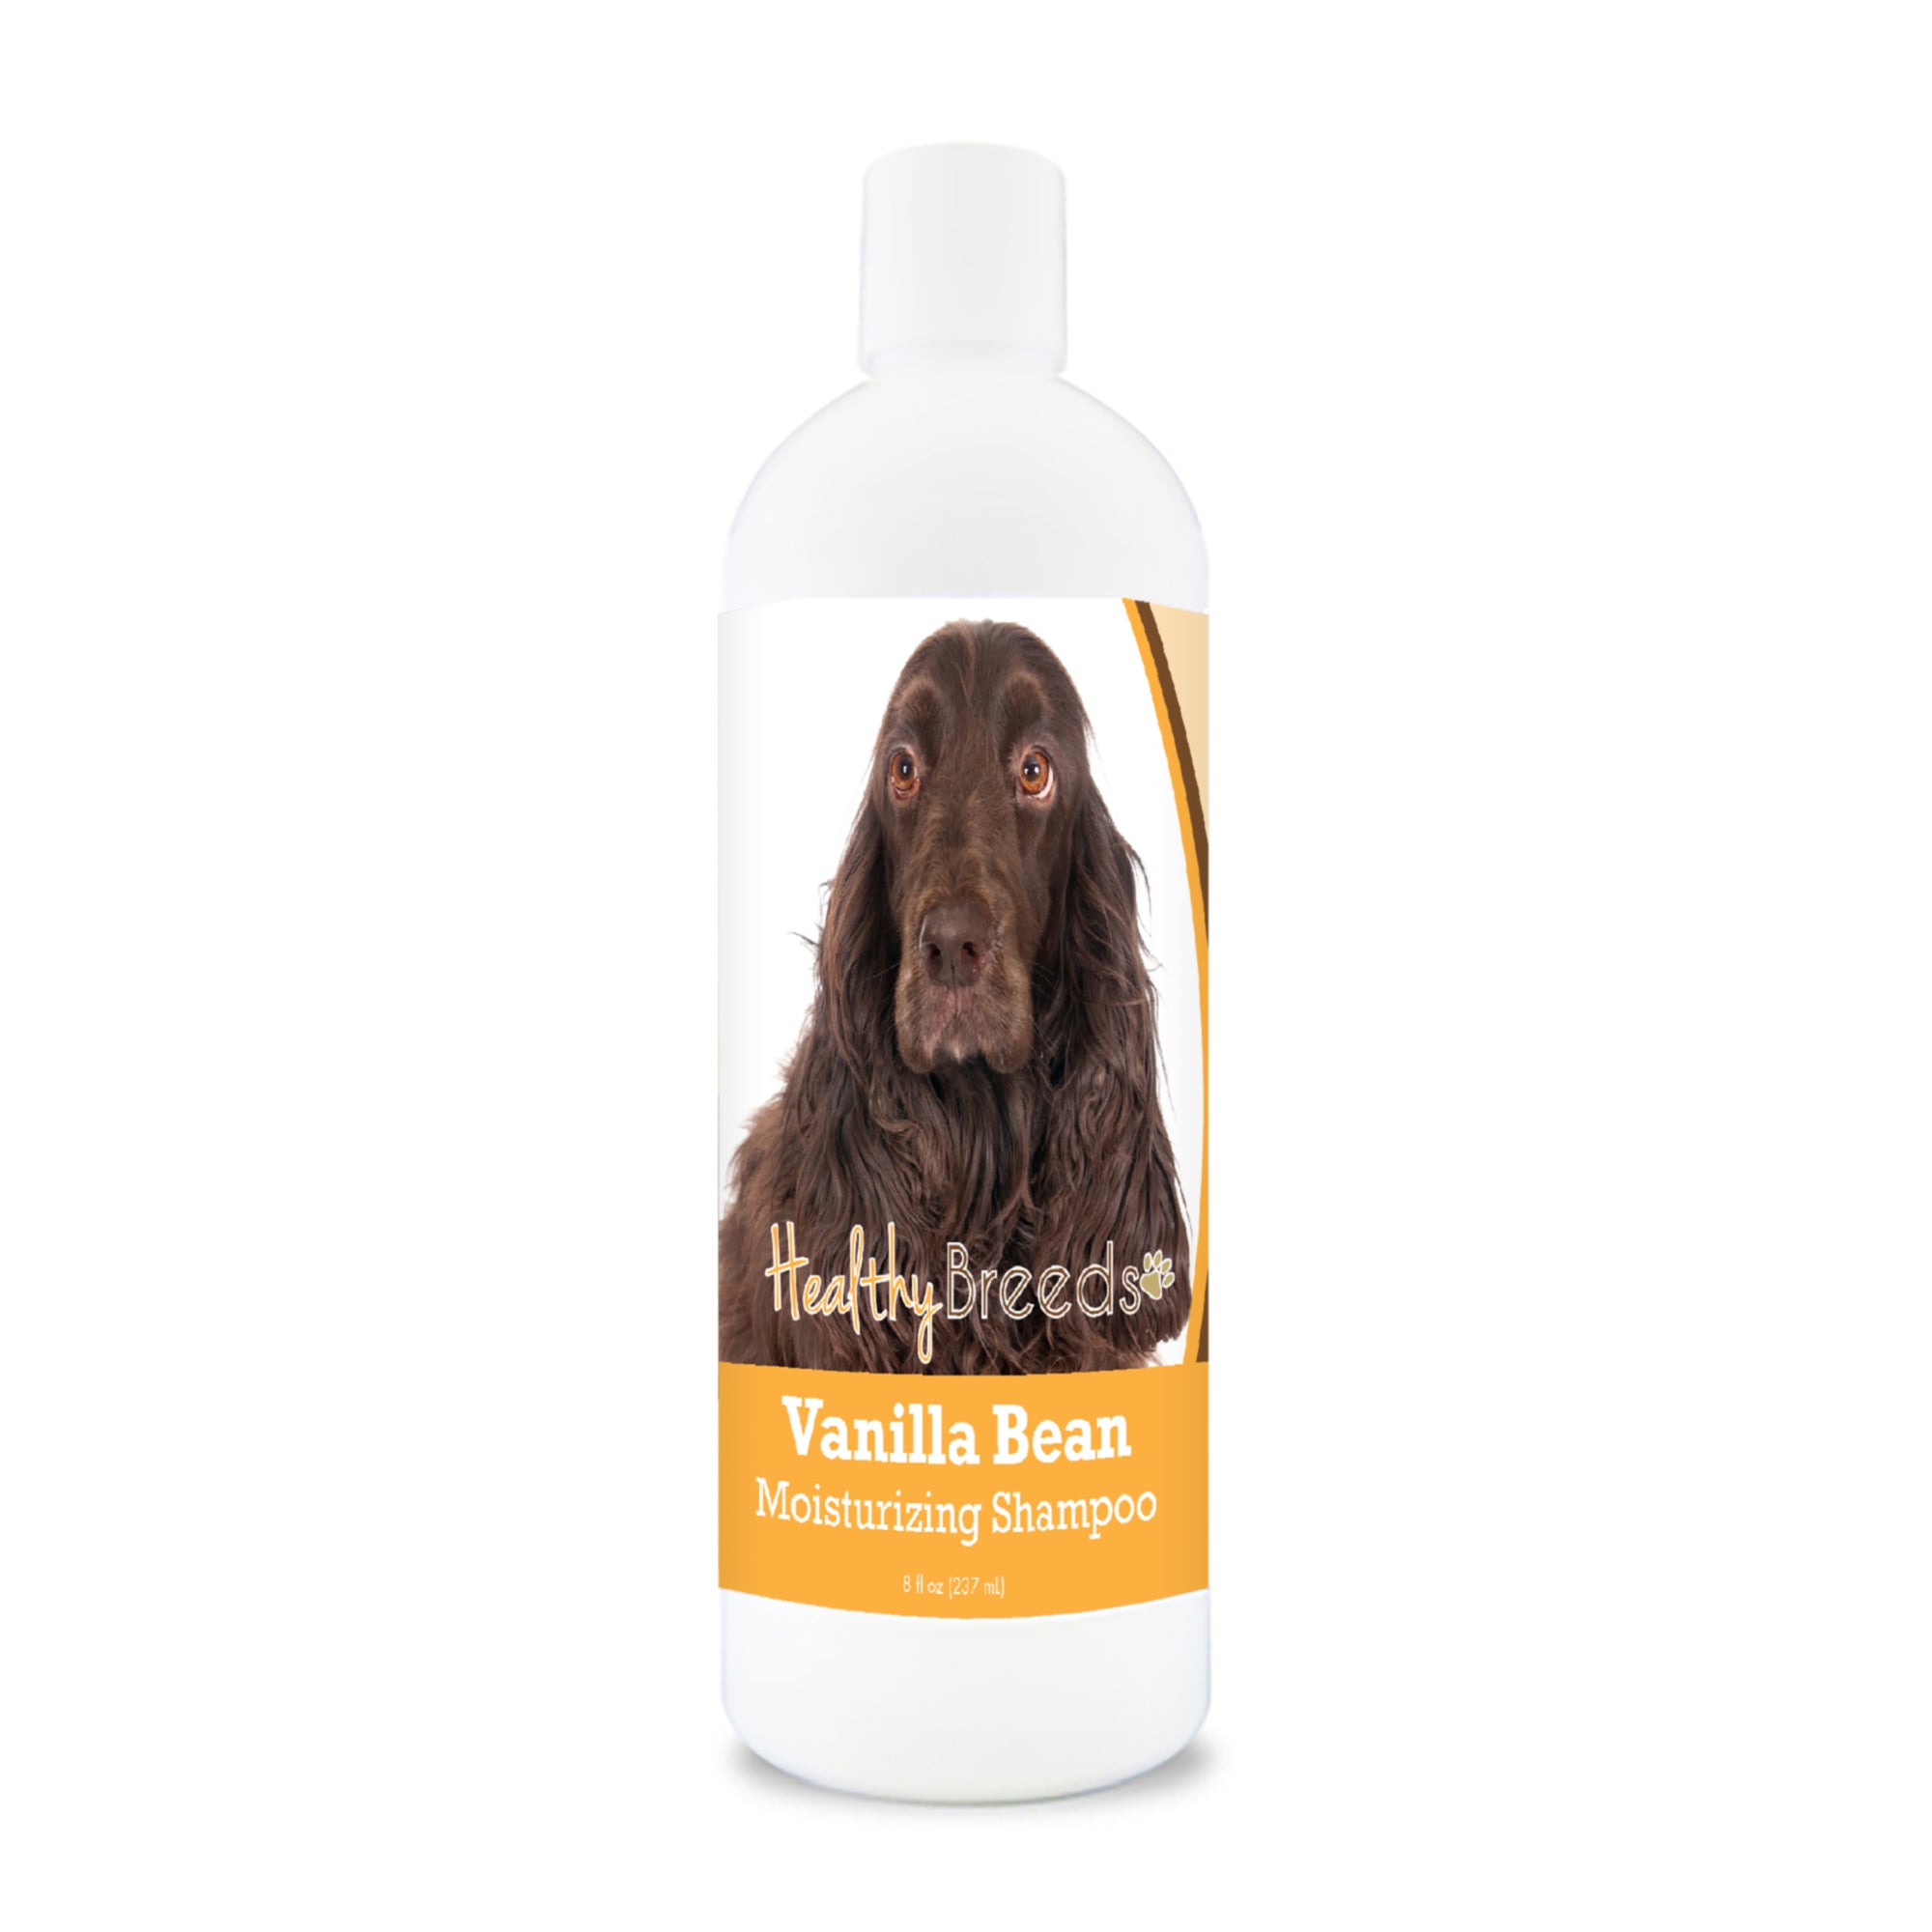 Field Spaniel Vanilla Bean Moisturizing Shampoo 8 oz